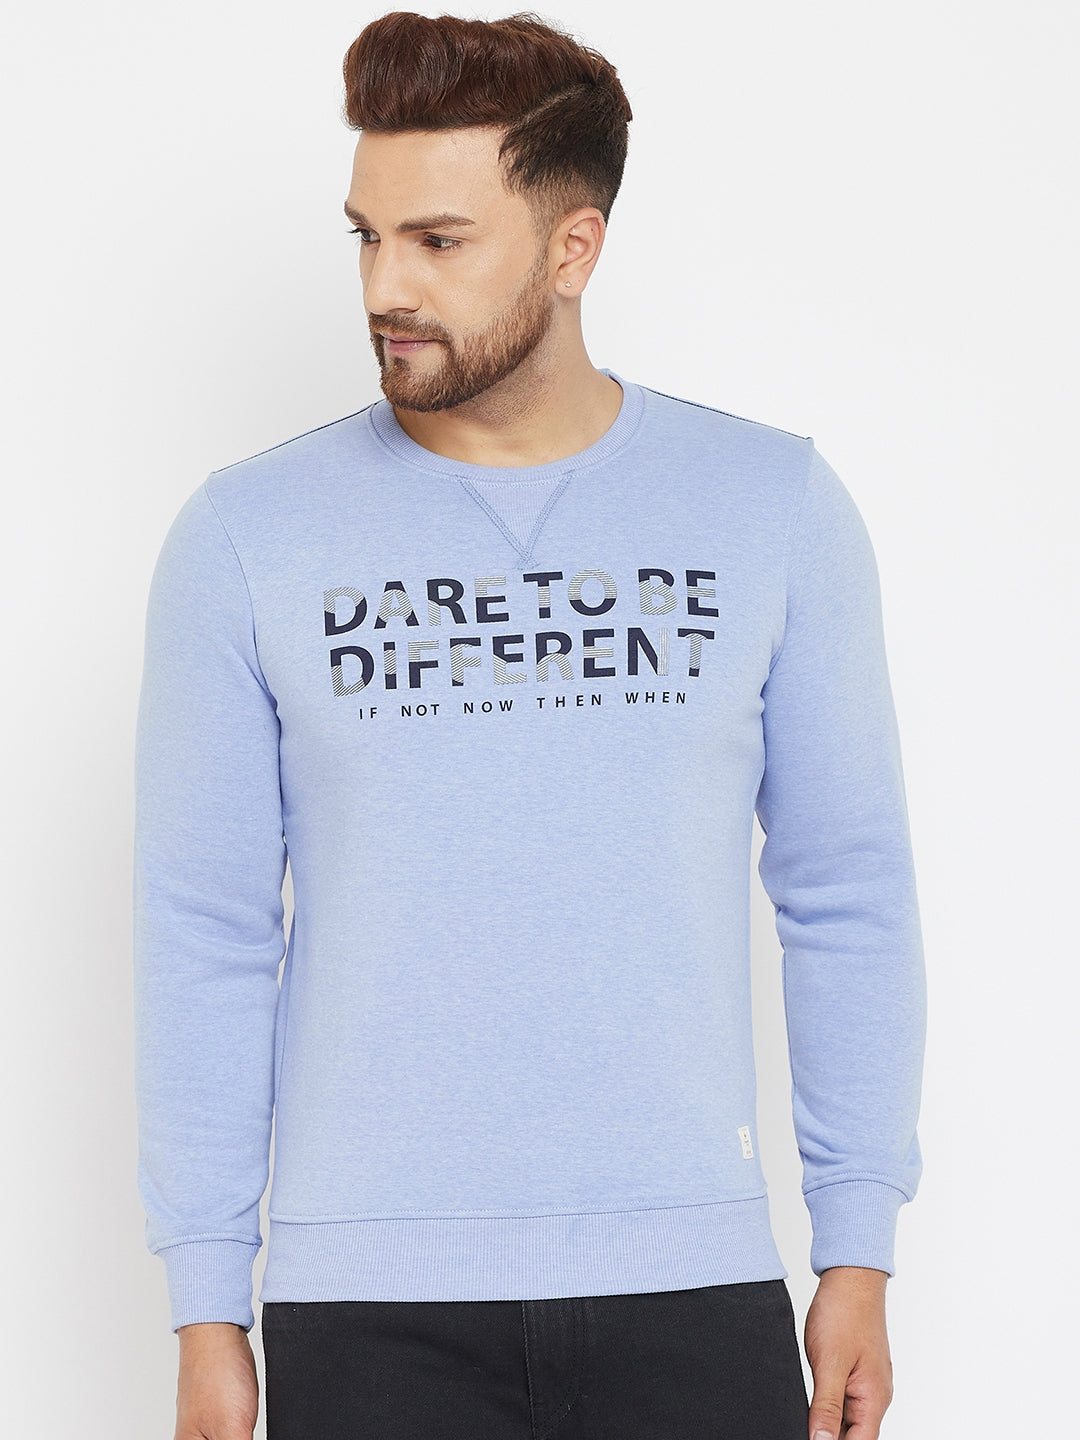 Blue Printed Sweatshirt - Men Sweatshirts